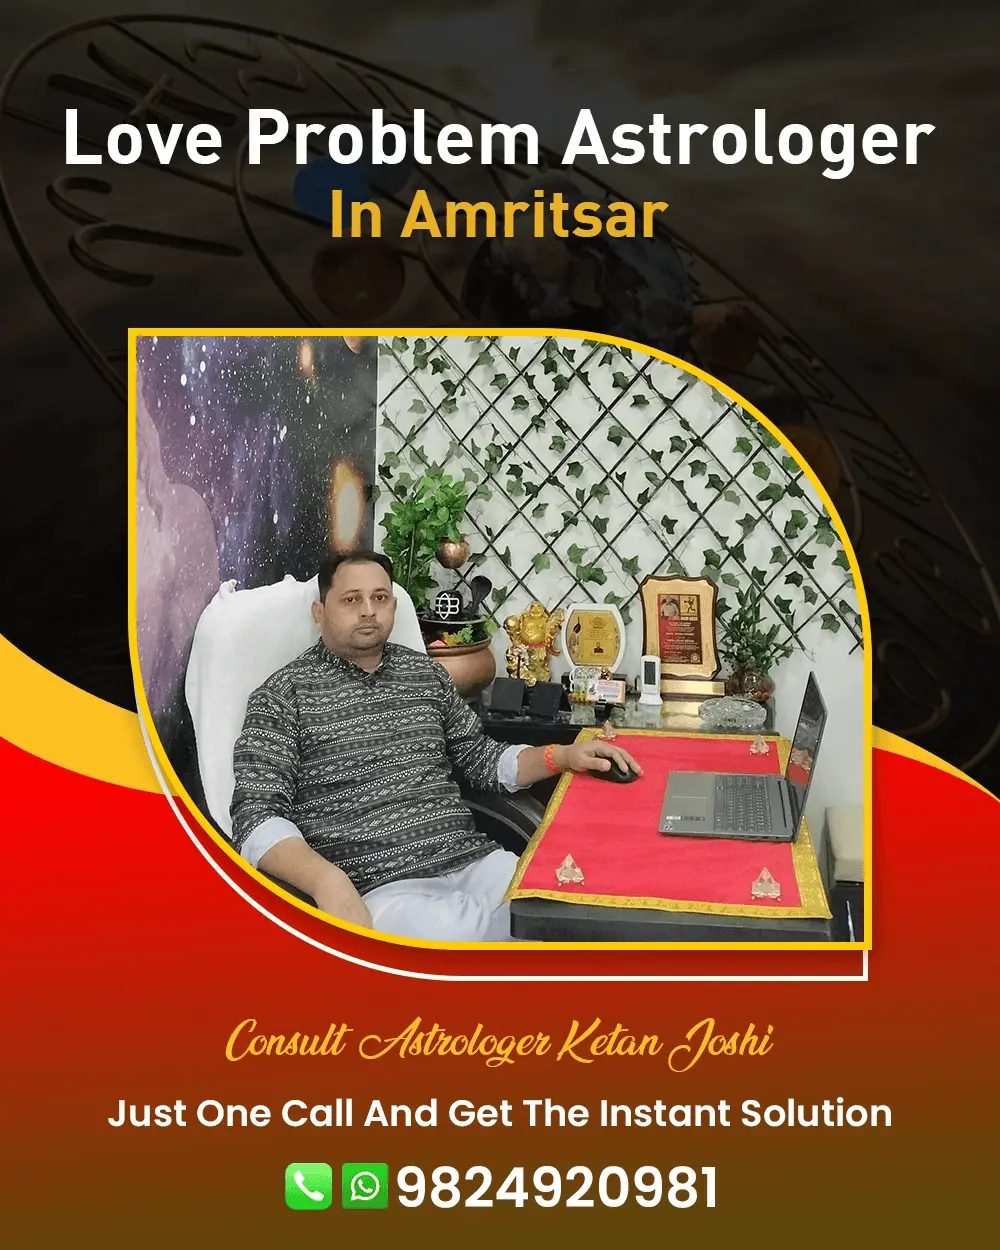 Love Problem Astrologer In Amritsar